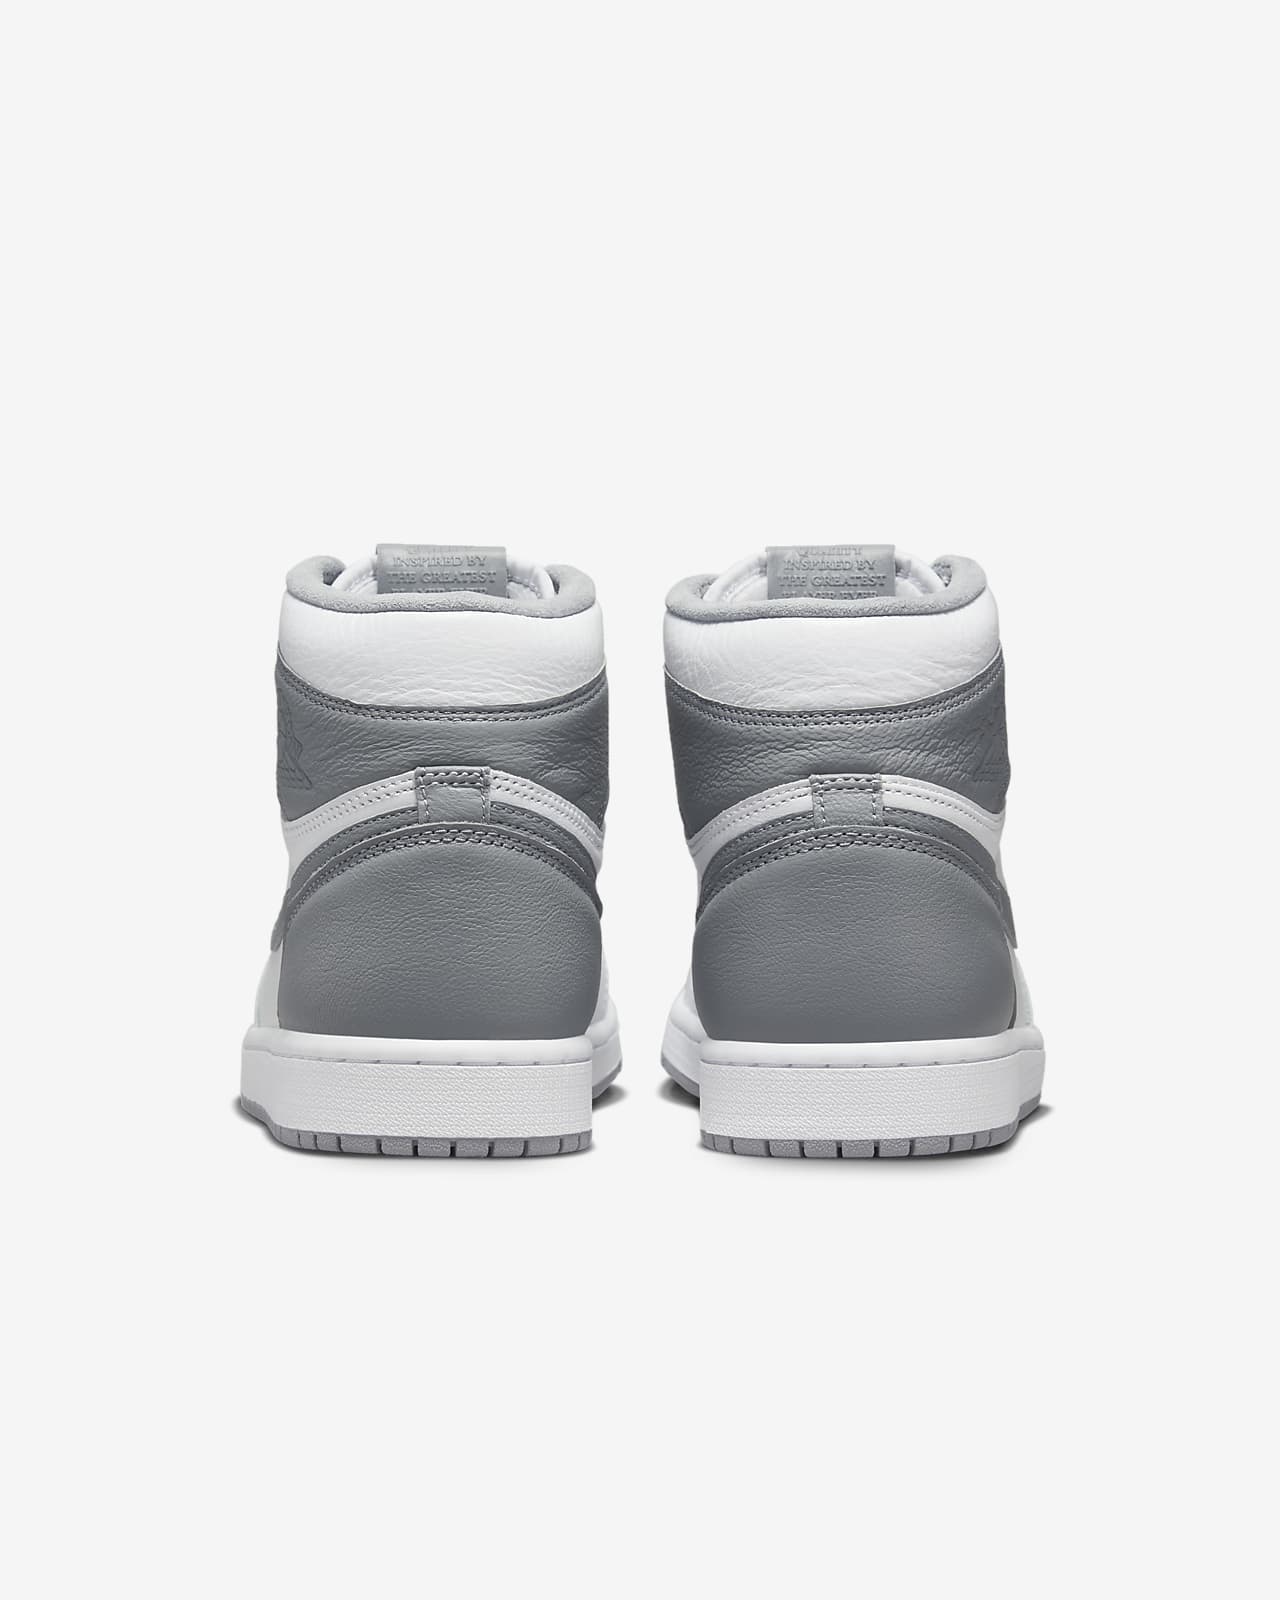 Air Jordan 1 Retro 高筒OG 鞋款。Nike TW